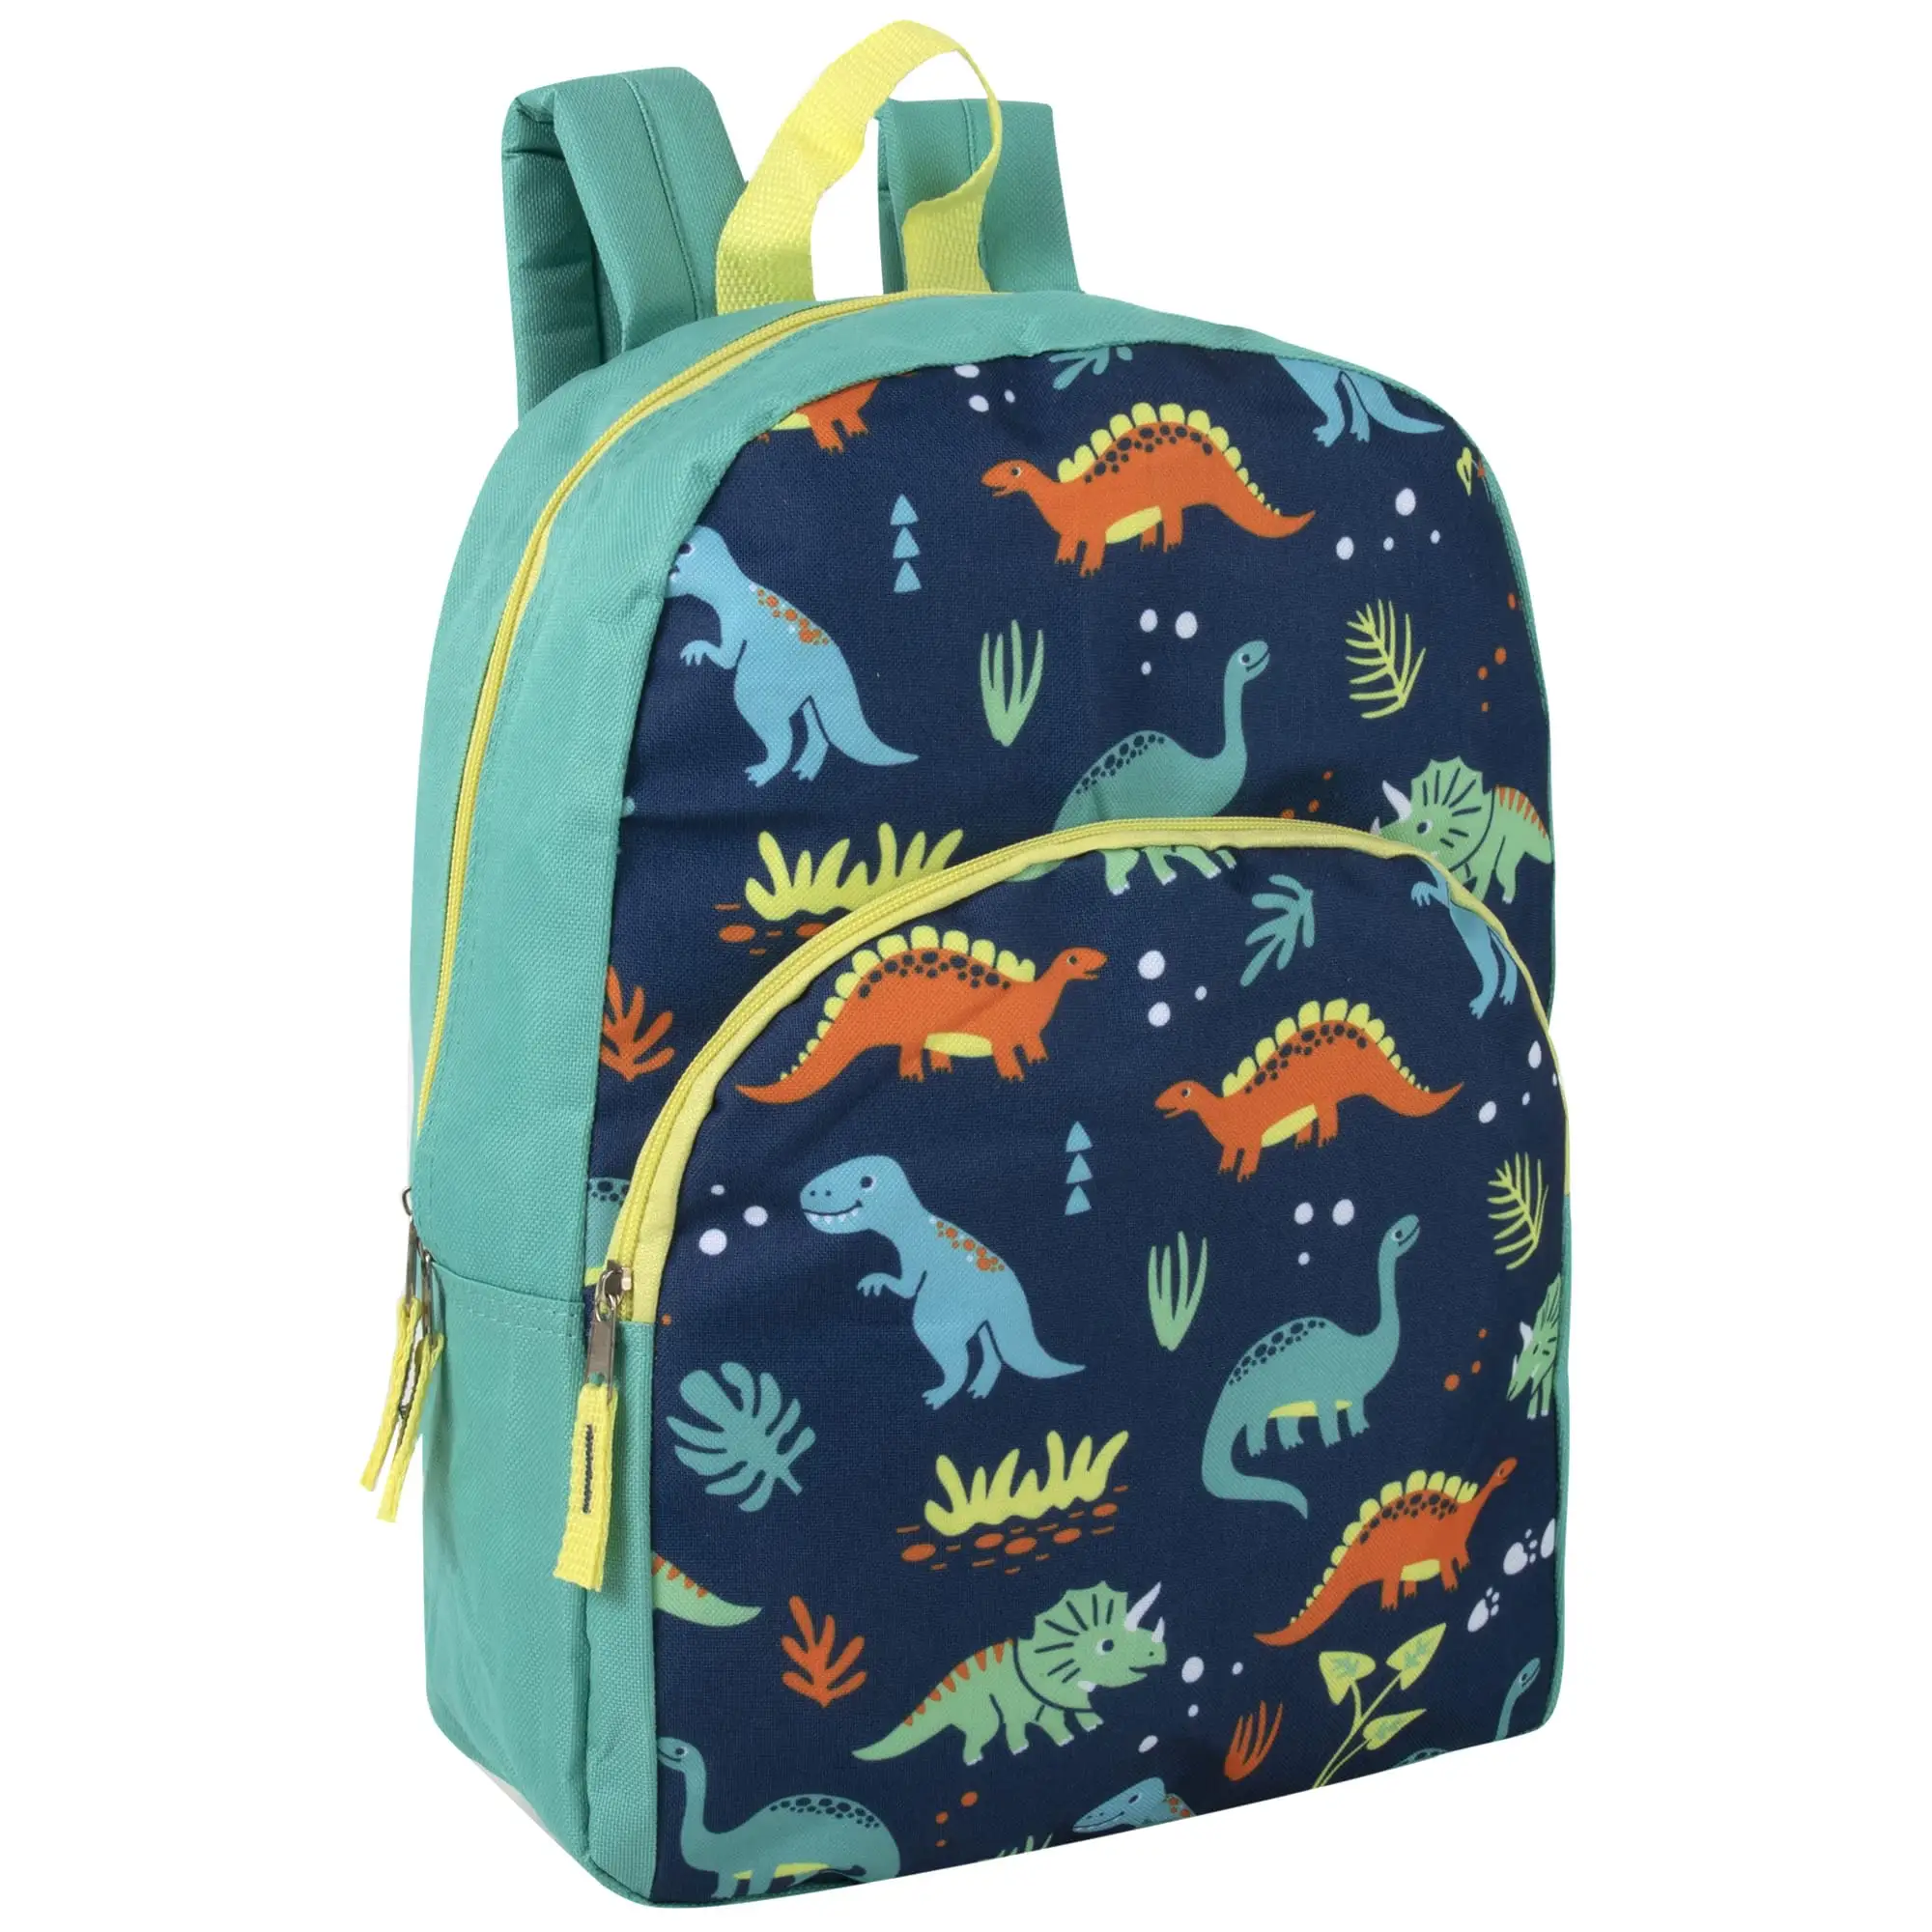 15 Inch Custom Patterned Backpack Bags for kids School Students Preschool Kindergarten durable colorful bags